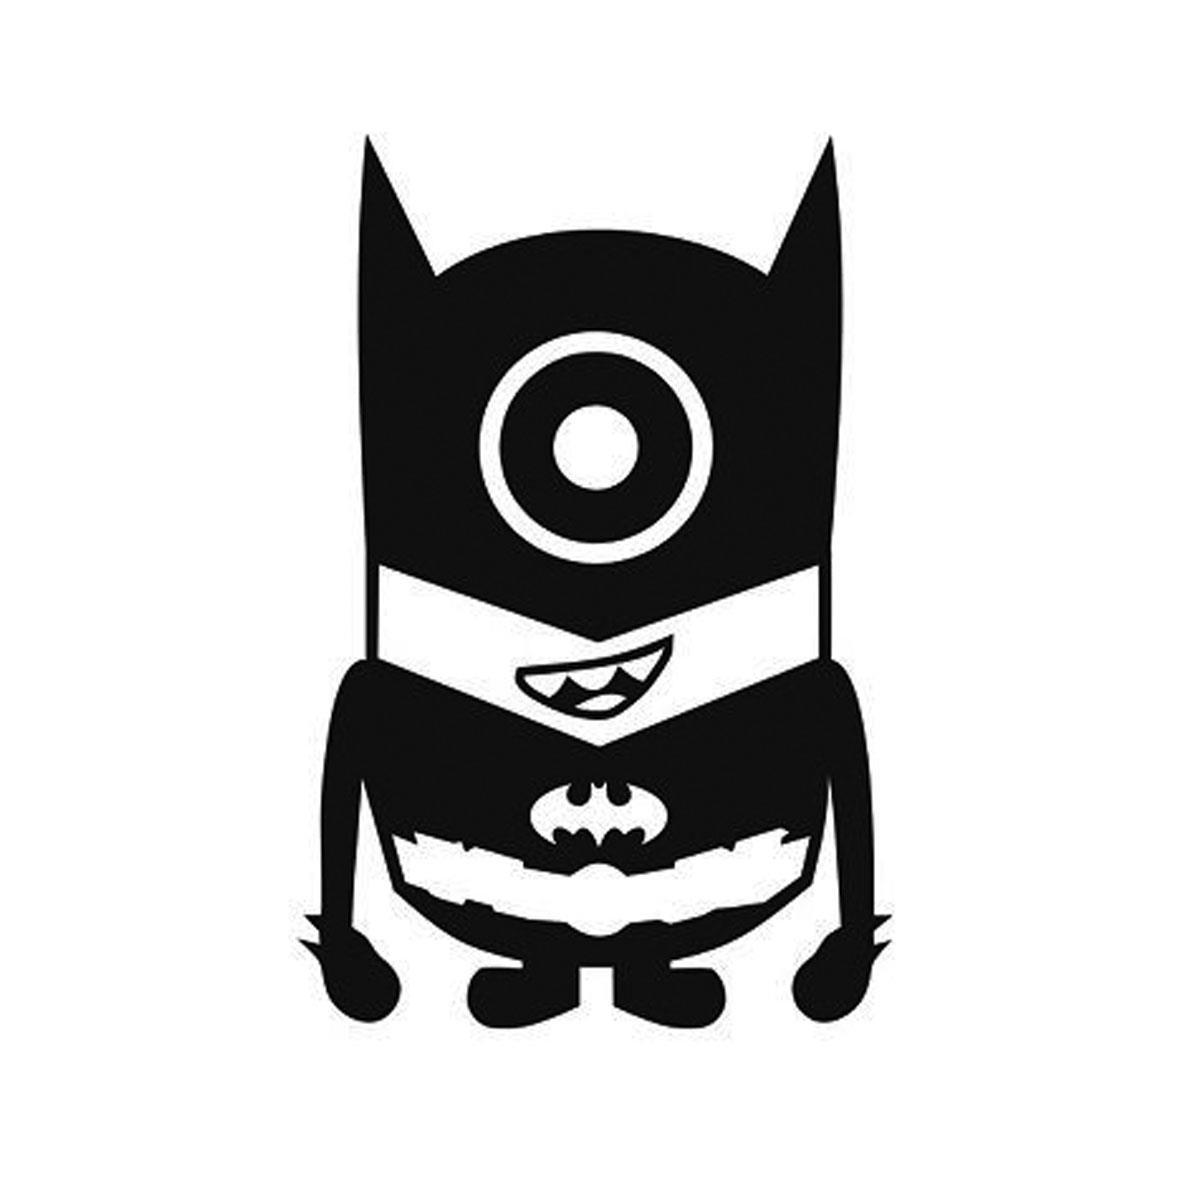 Batman Minion Sticker Free Shipping Worldwide